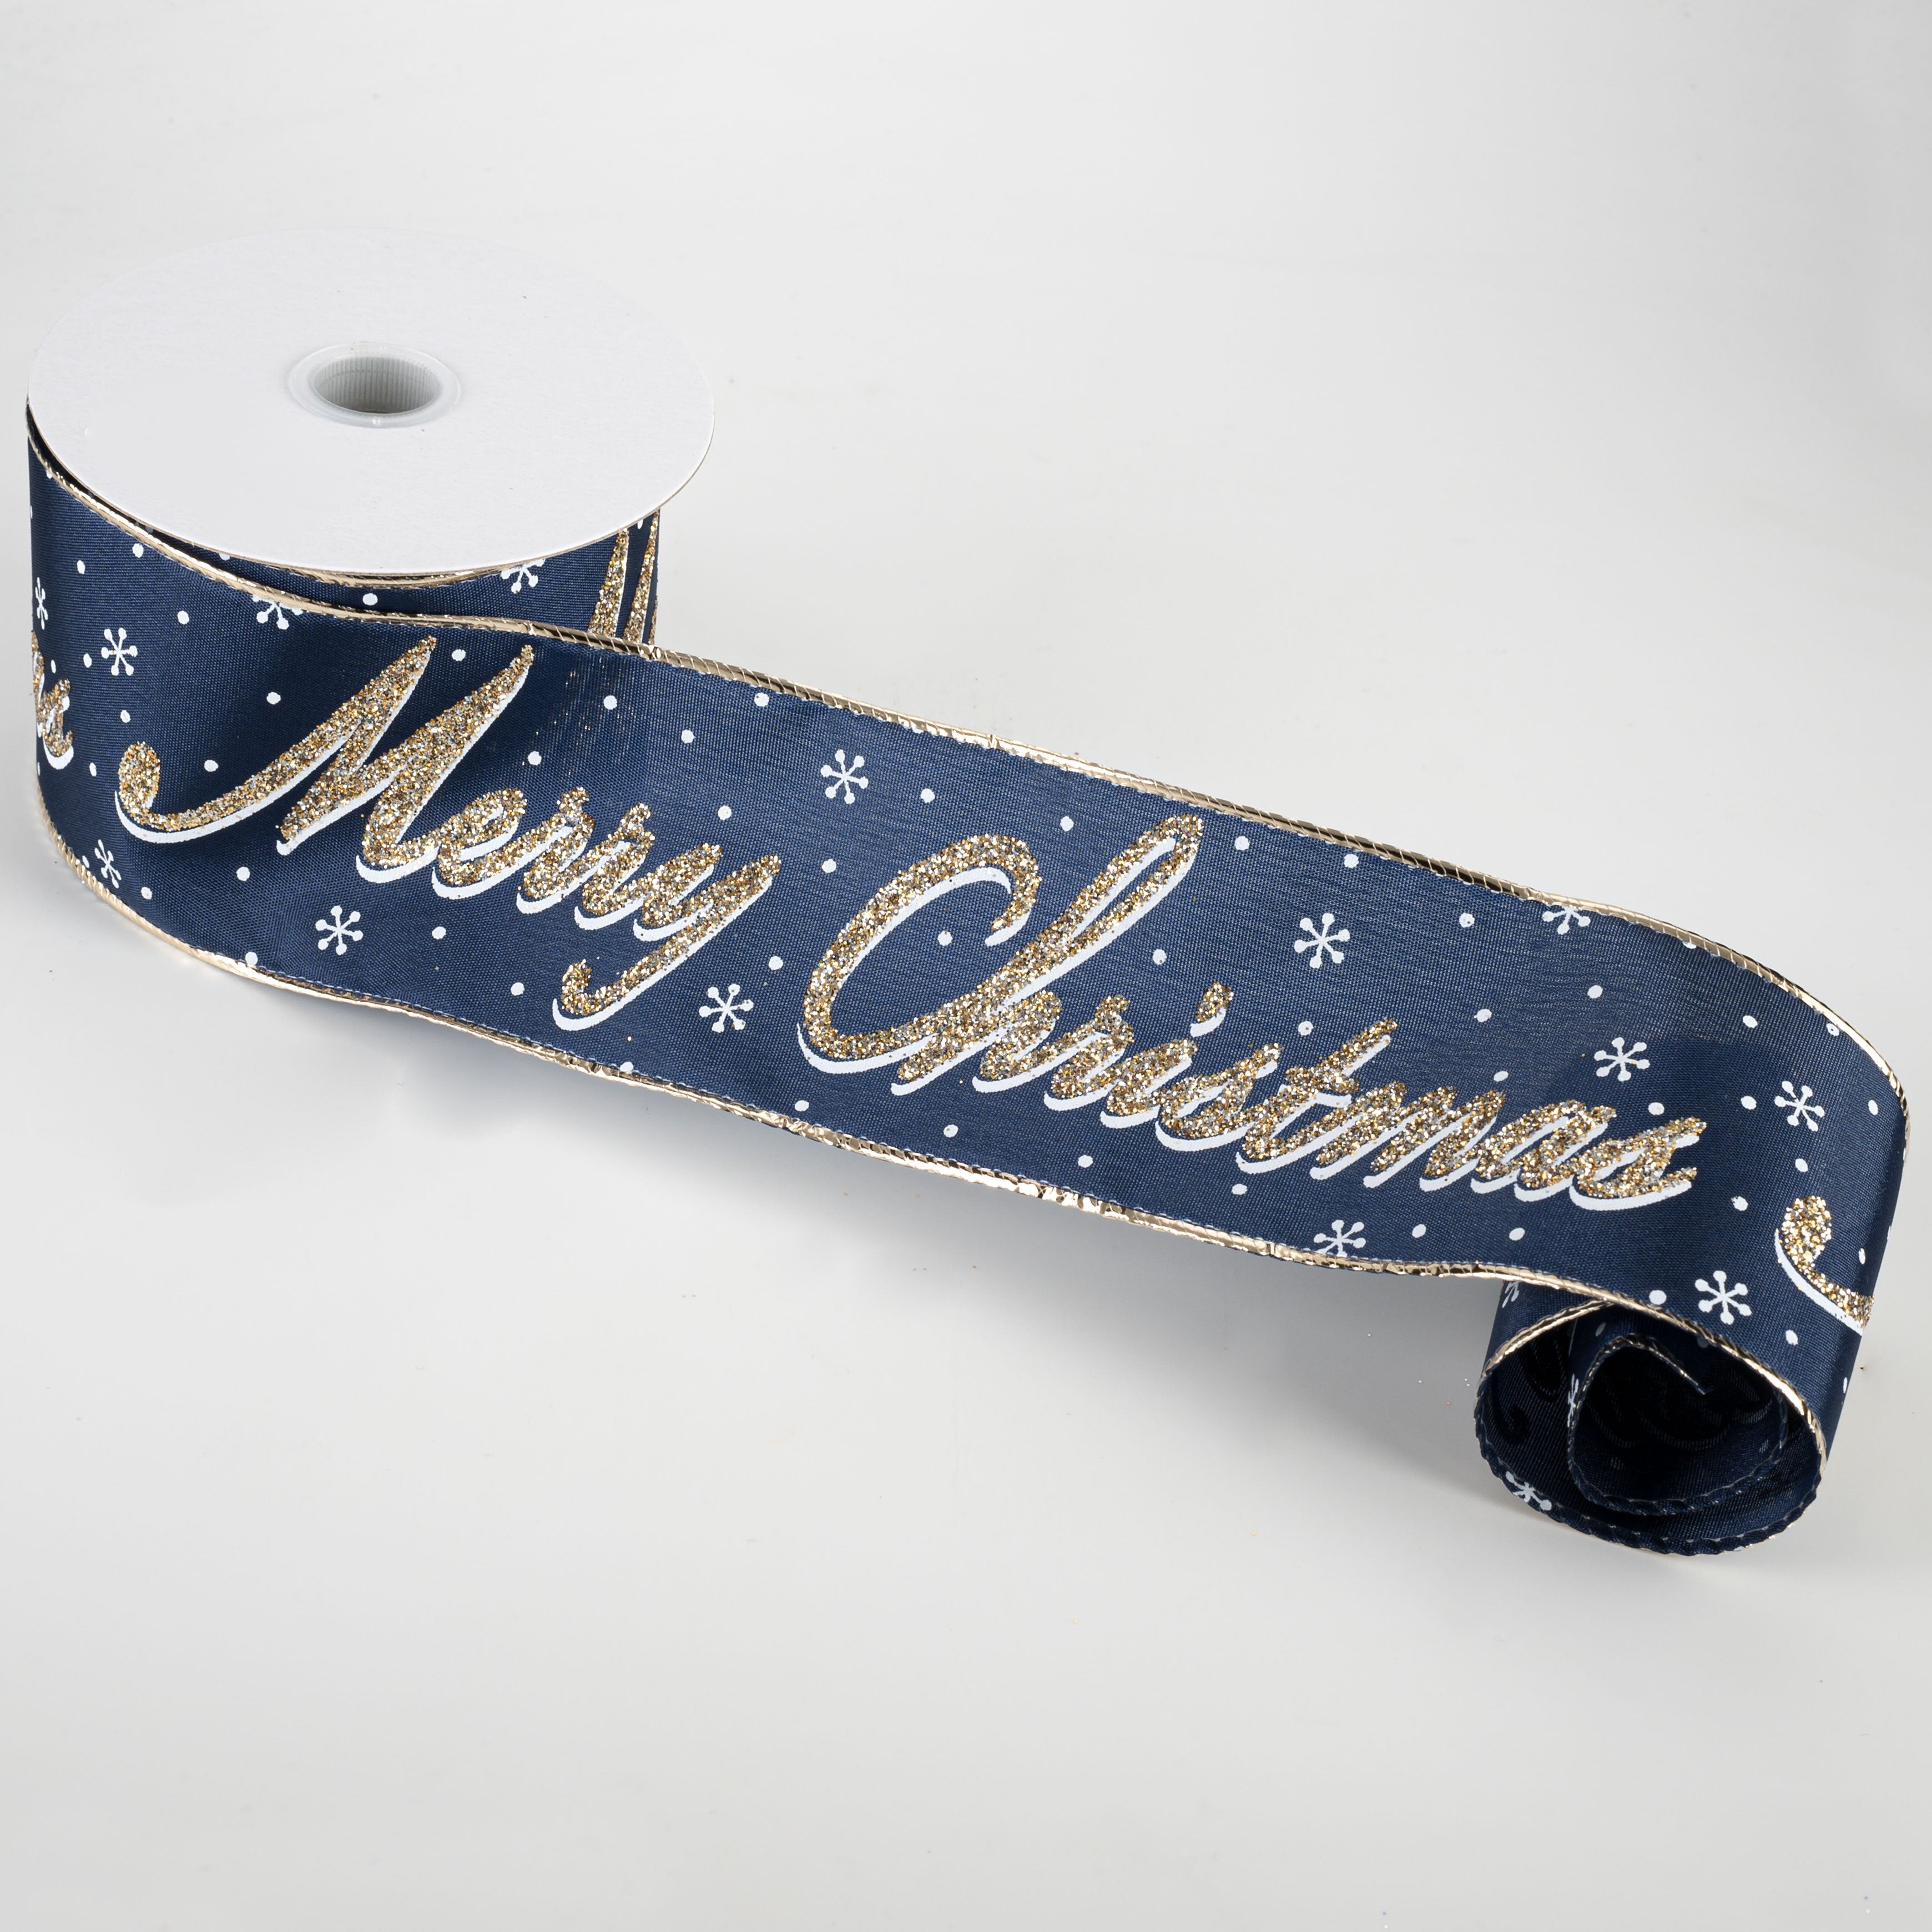 2.5" Glitter Merry Christmas Lettering Ribbon: Navy, Champagne Gold, White (10 Yards)